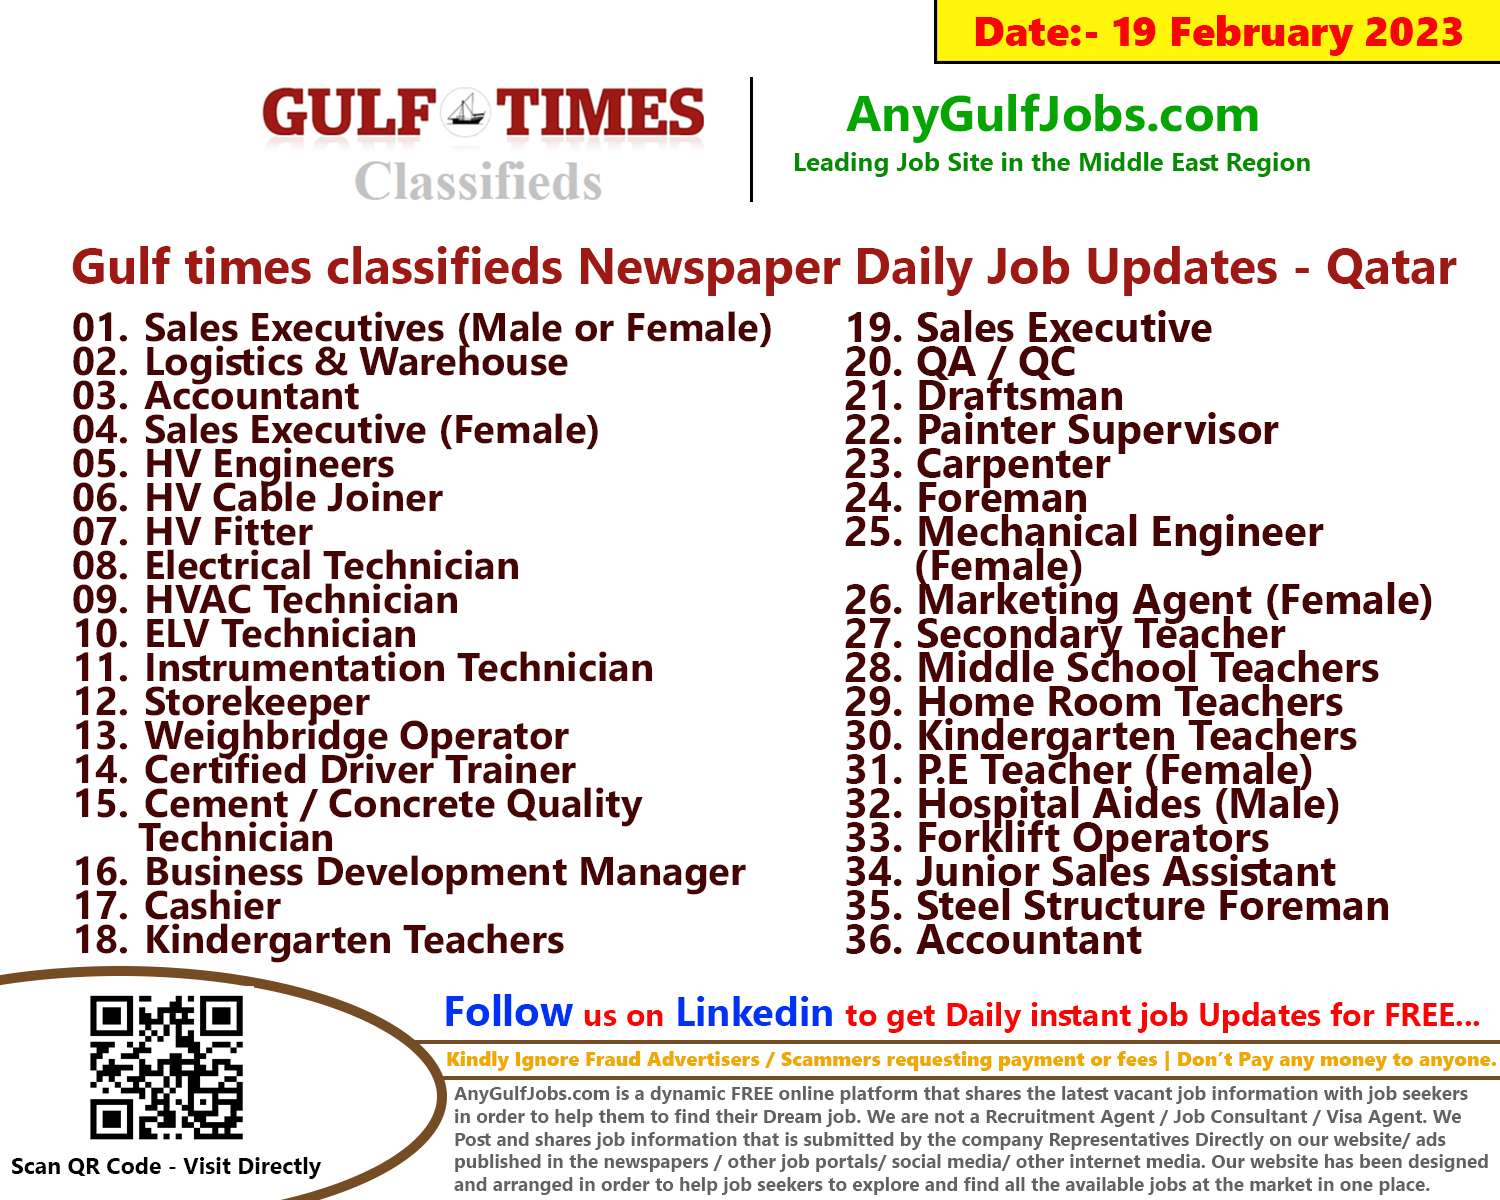 Gulf times classifieds Job Vacancies Qatar - 19 February 2023